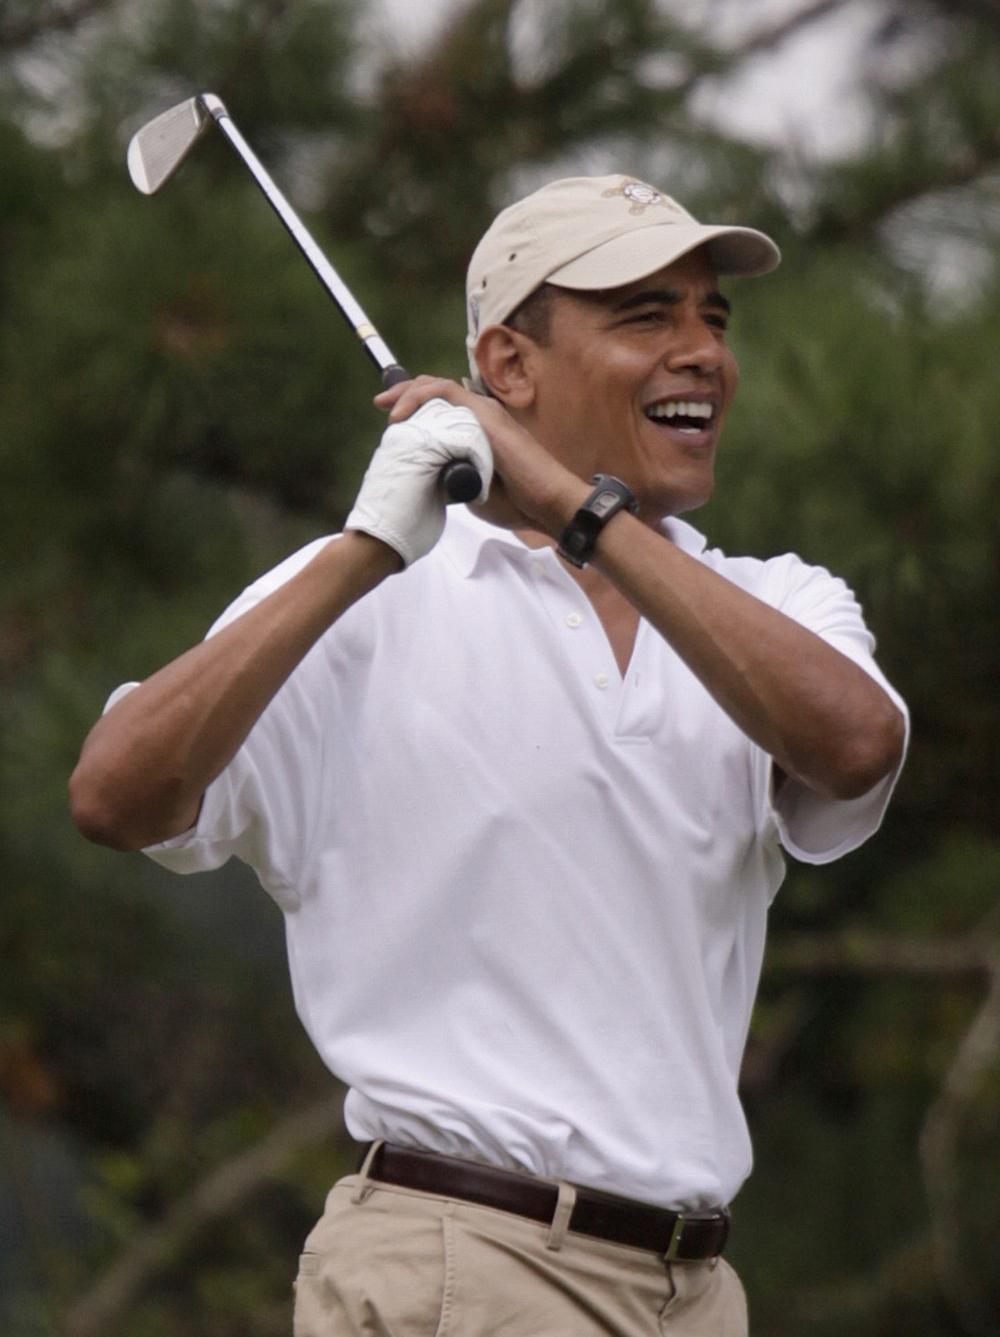 President Obama golfing this summer on Martha's Vineyard.